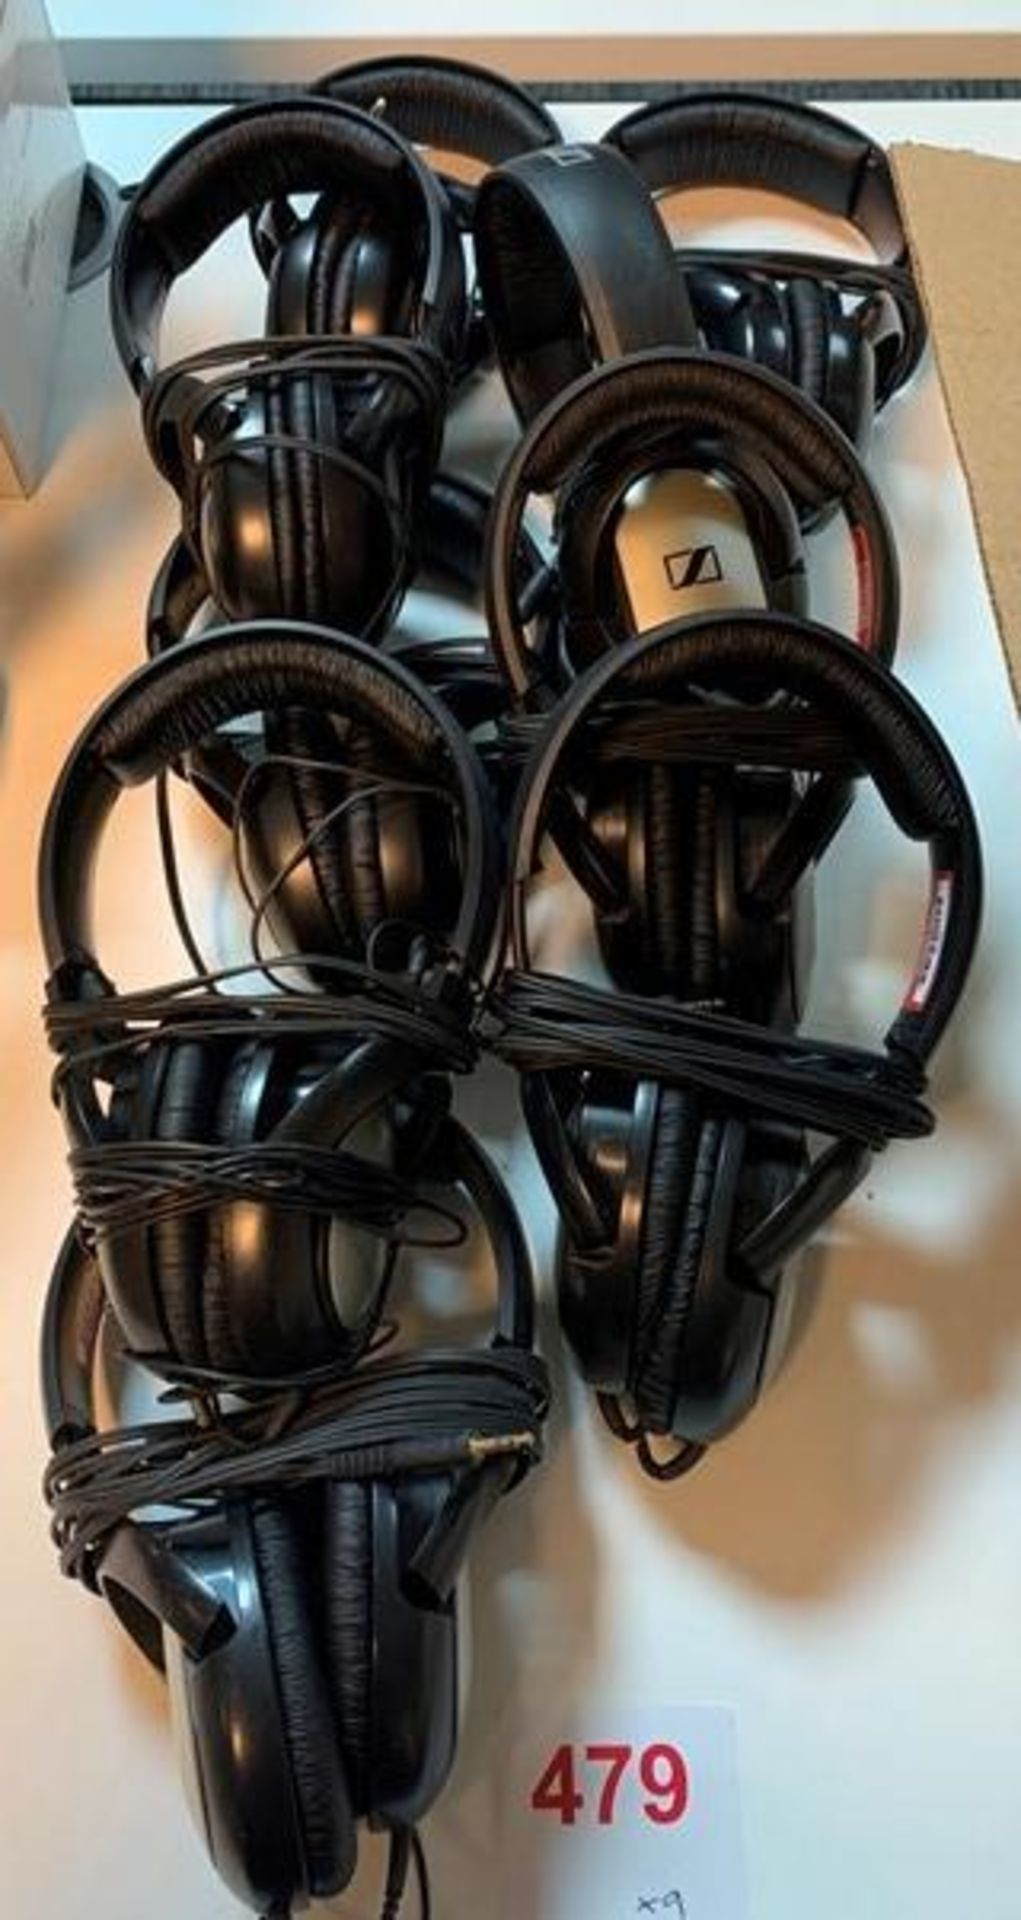 Nine sets of Sennheiser HD201 headsets